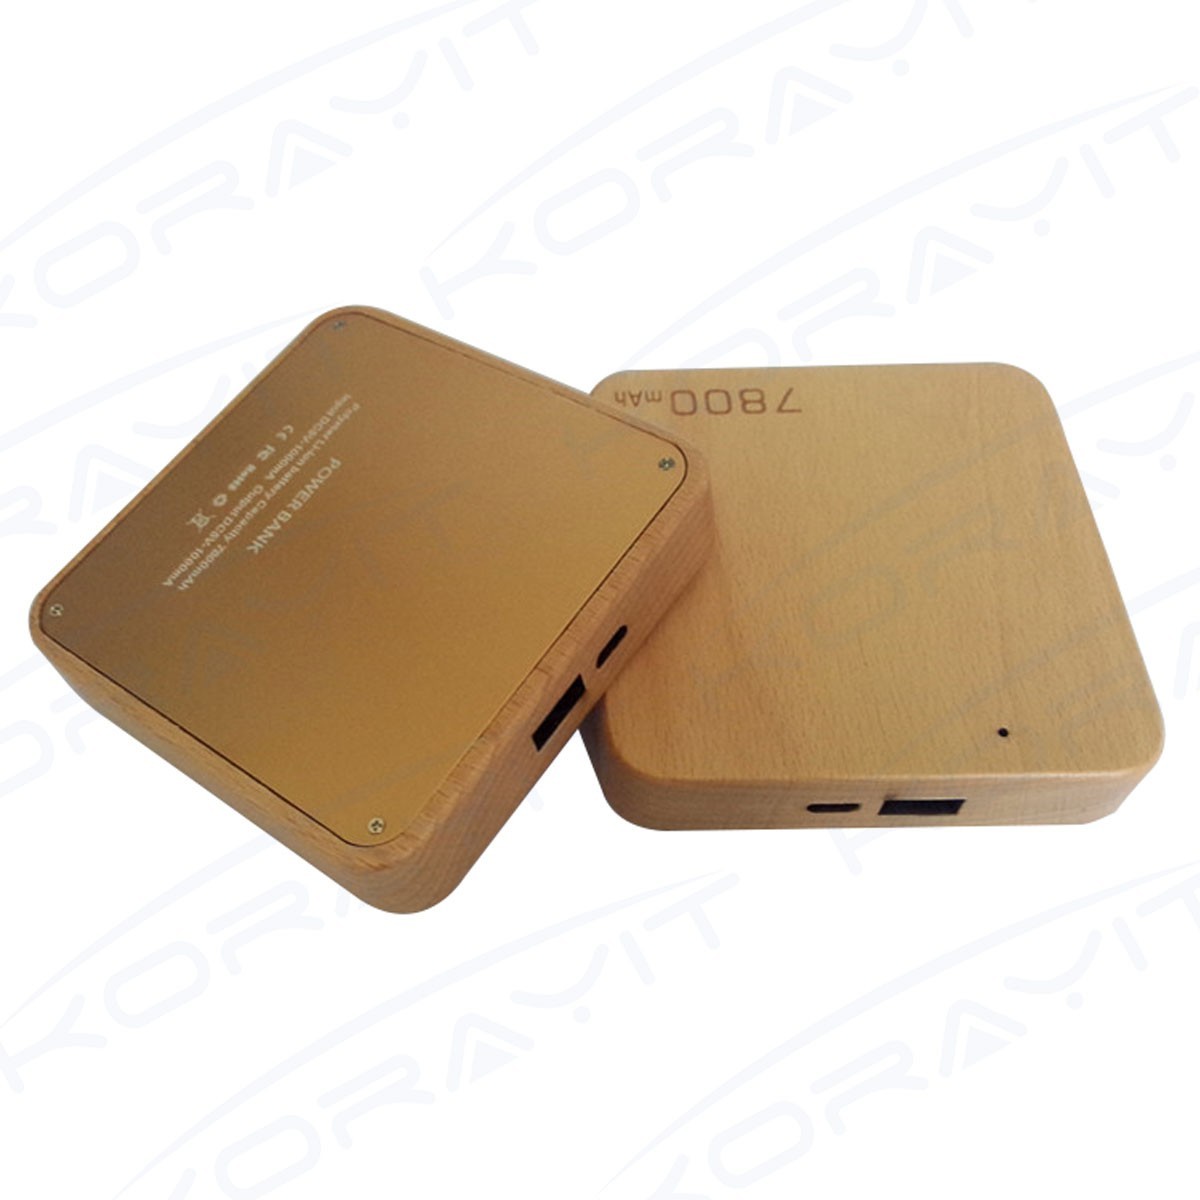 China Wood Box Shape Power Bank 5200mAh,External Battery Pack Promotional Gifts wholesale